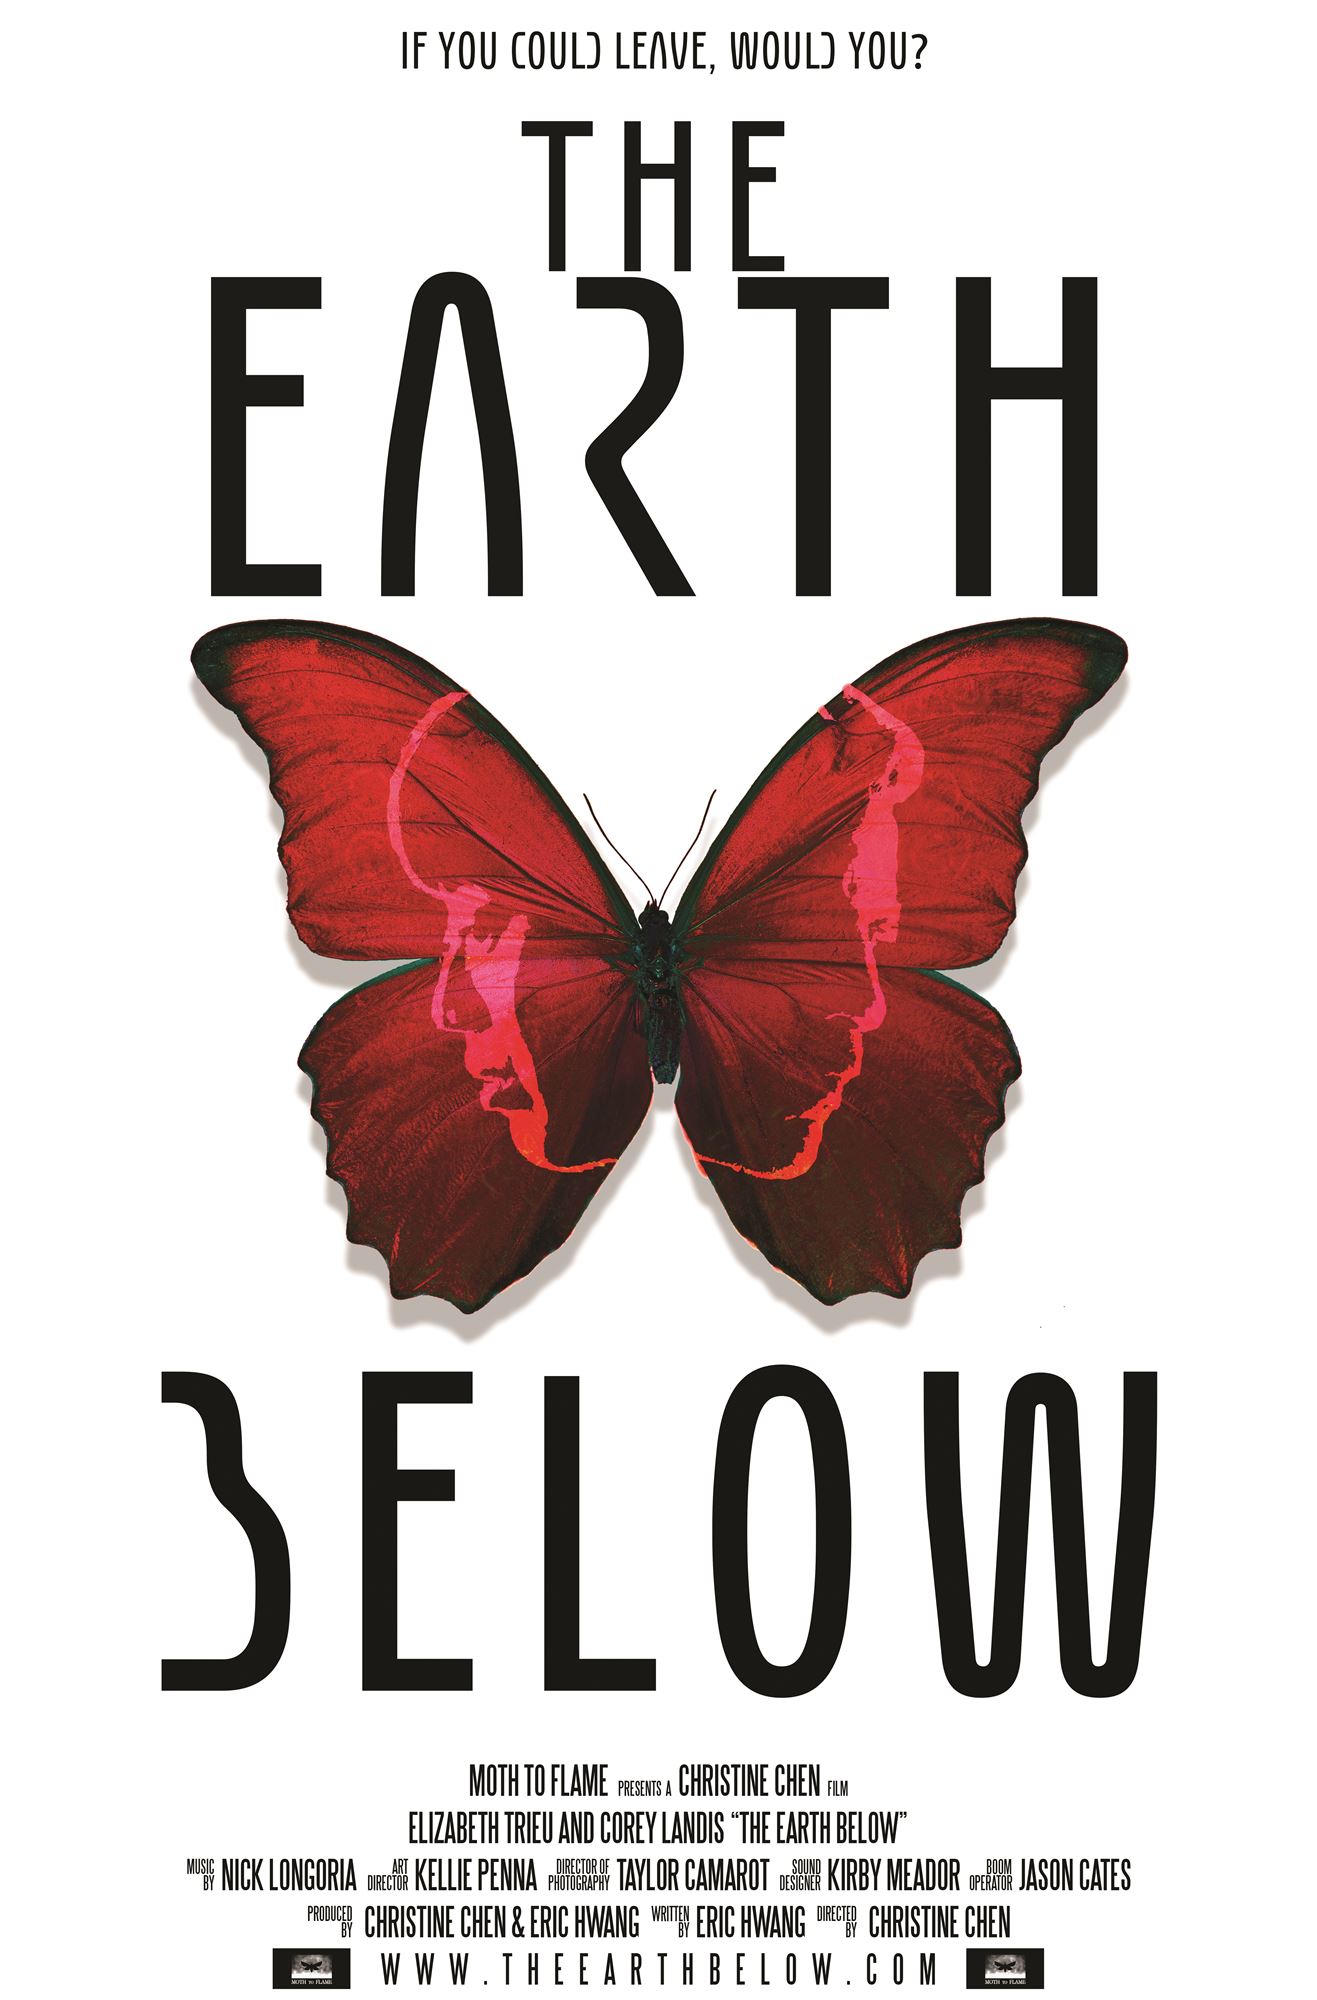 The Earth Below